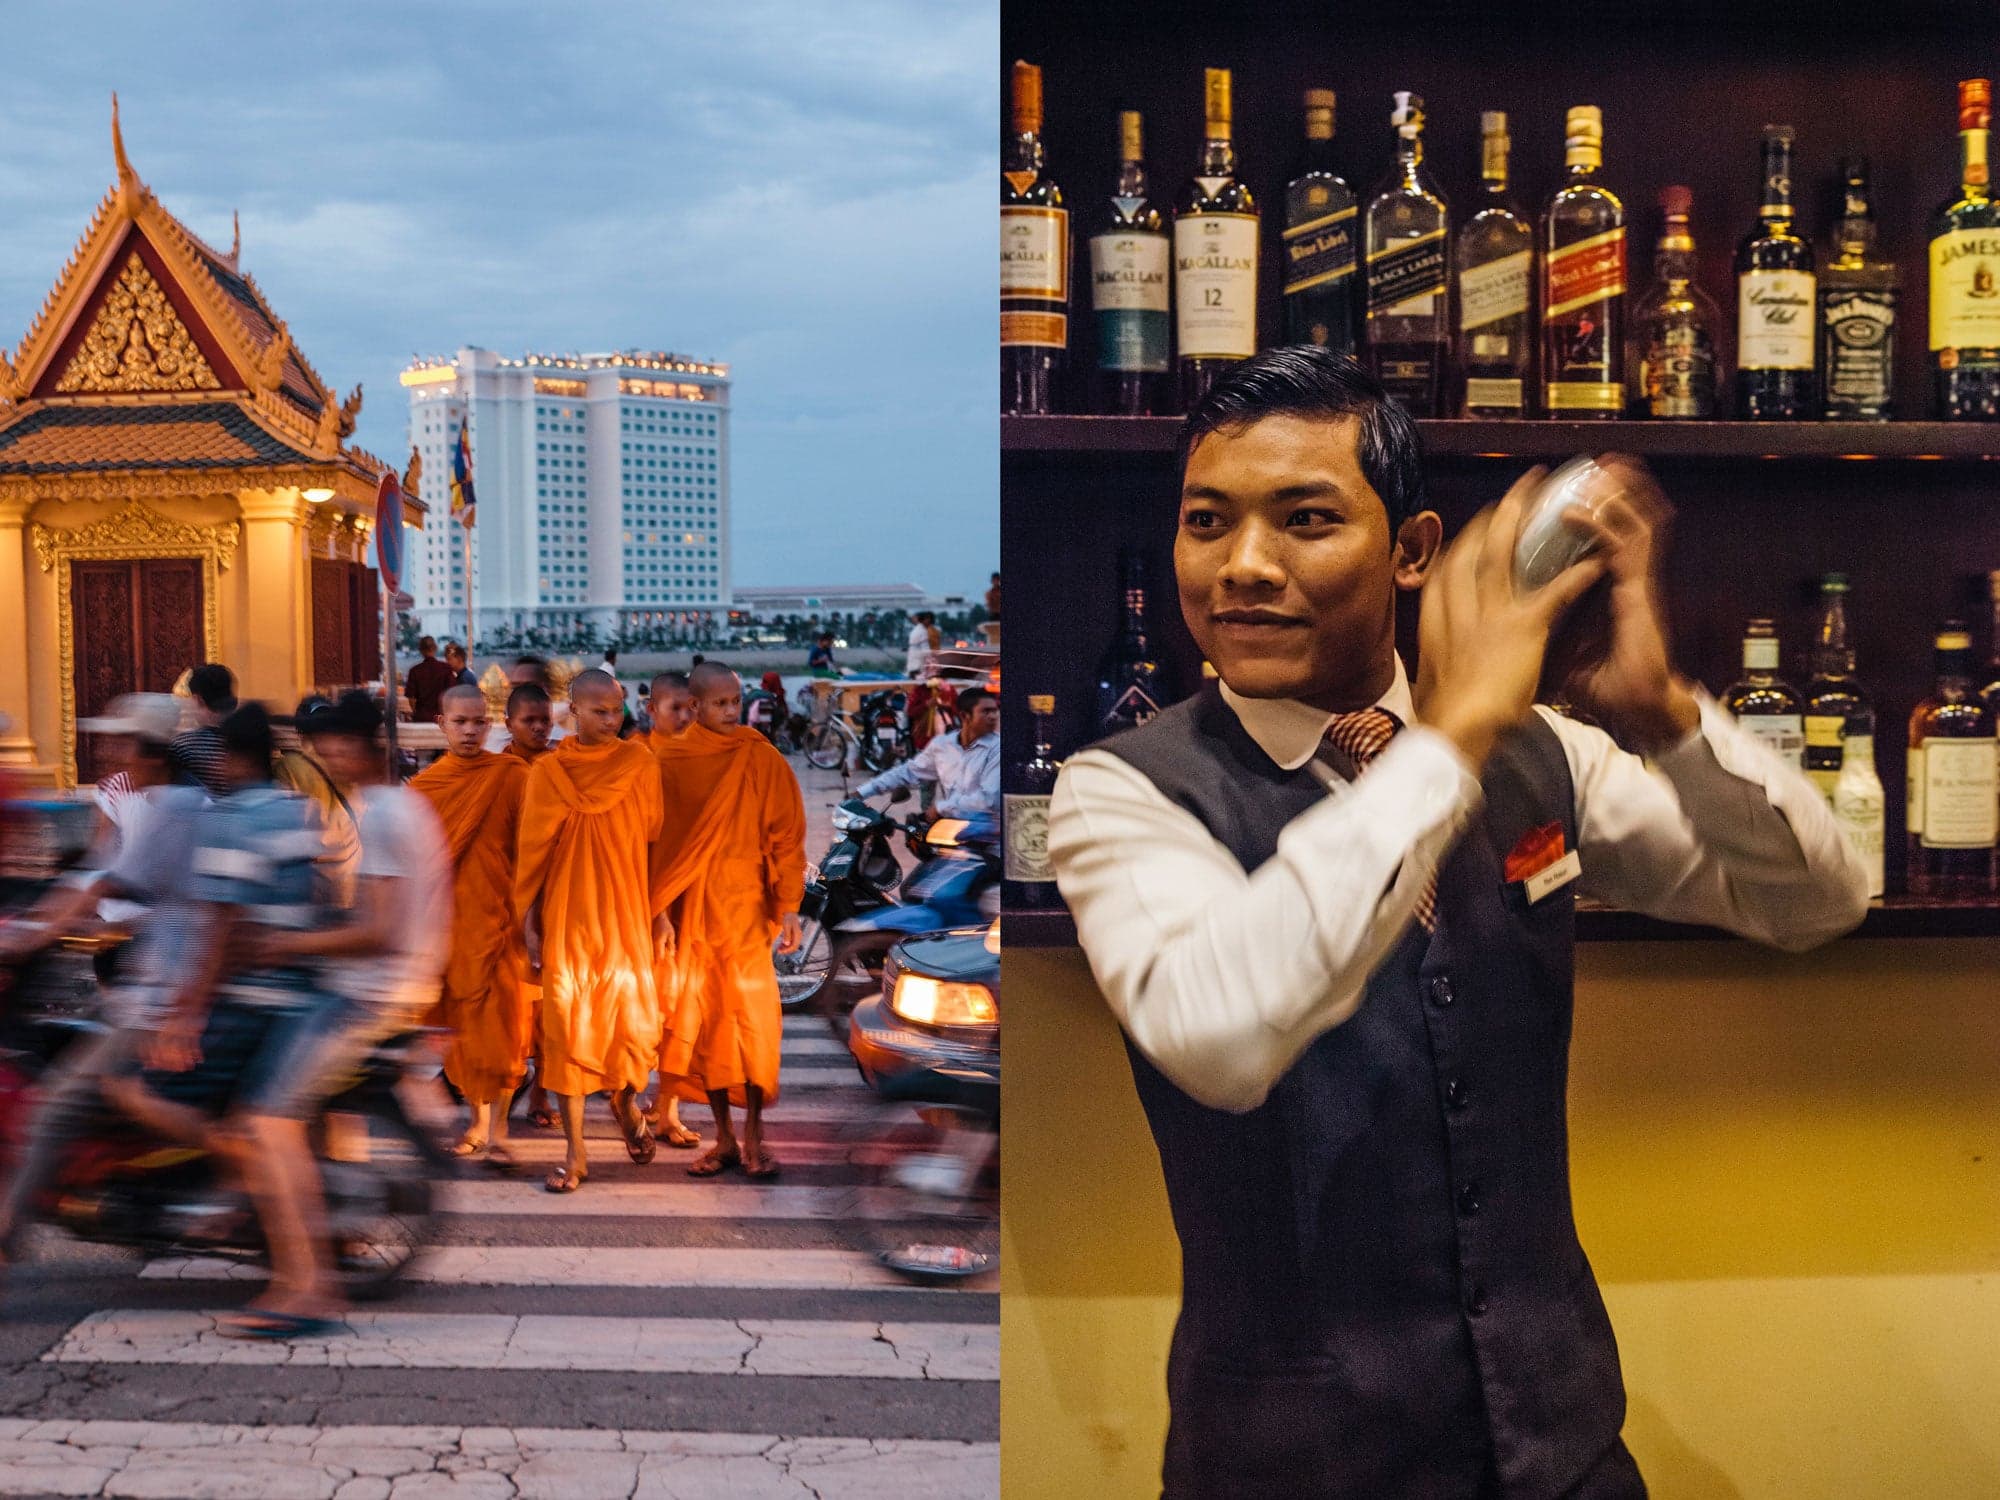 Tibetan Monks on the streets of Phnom Penh; Siem Reap bartender — Cambodia